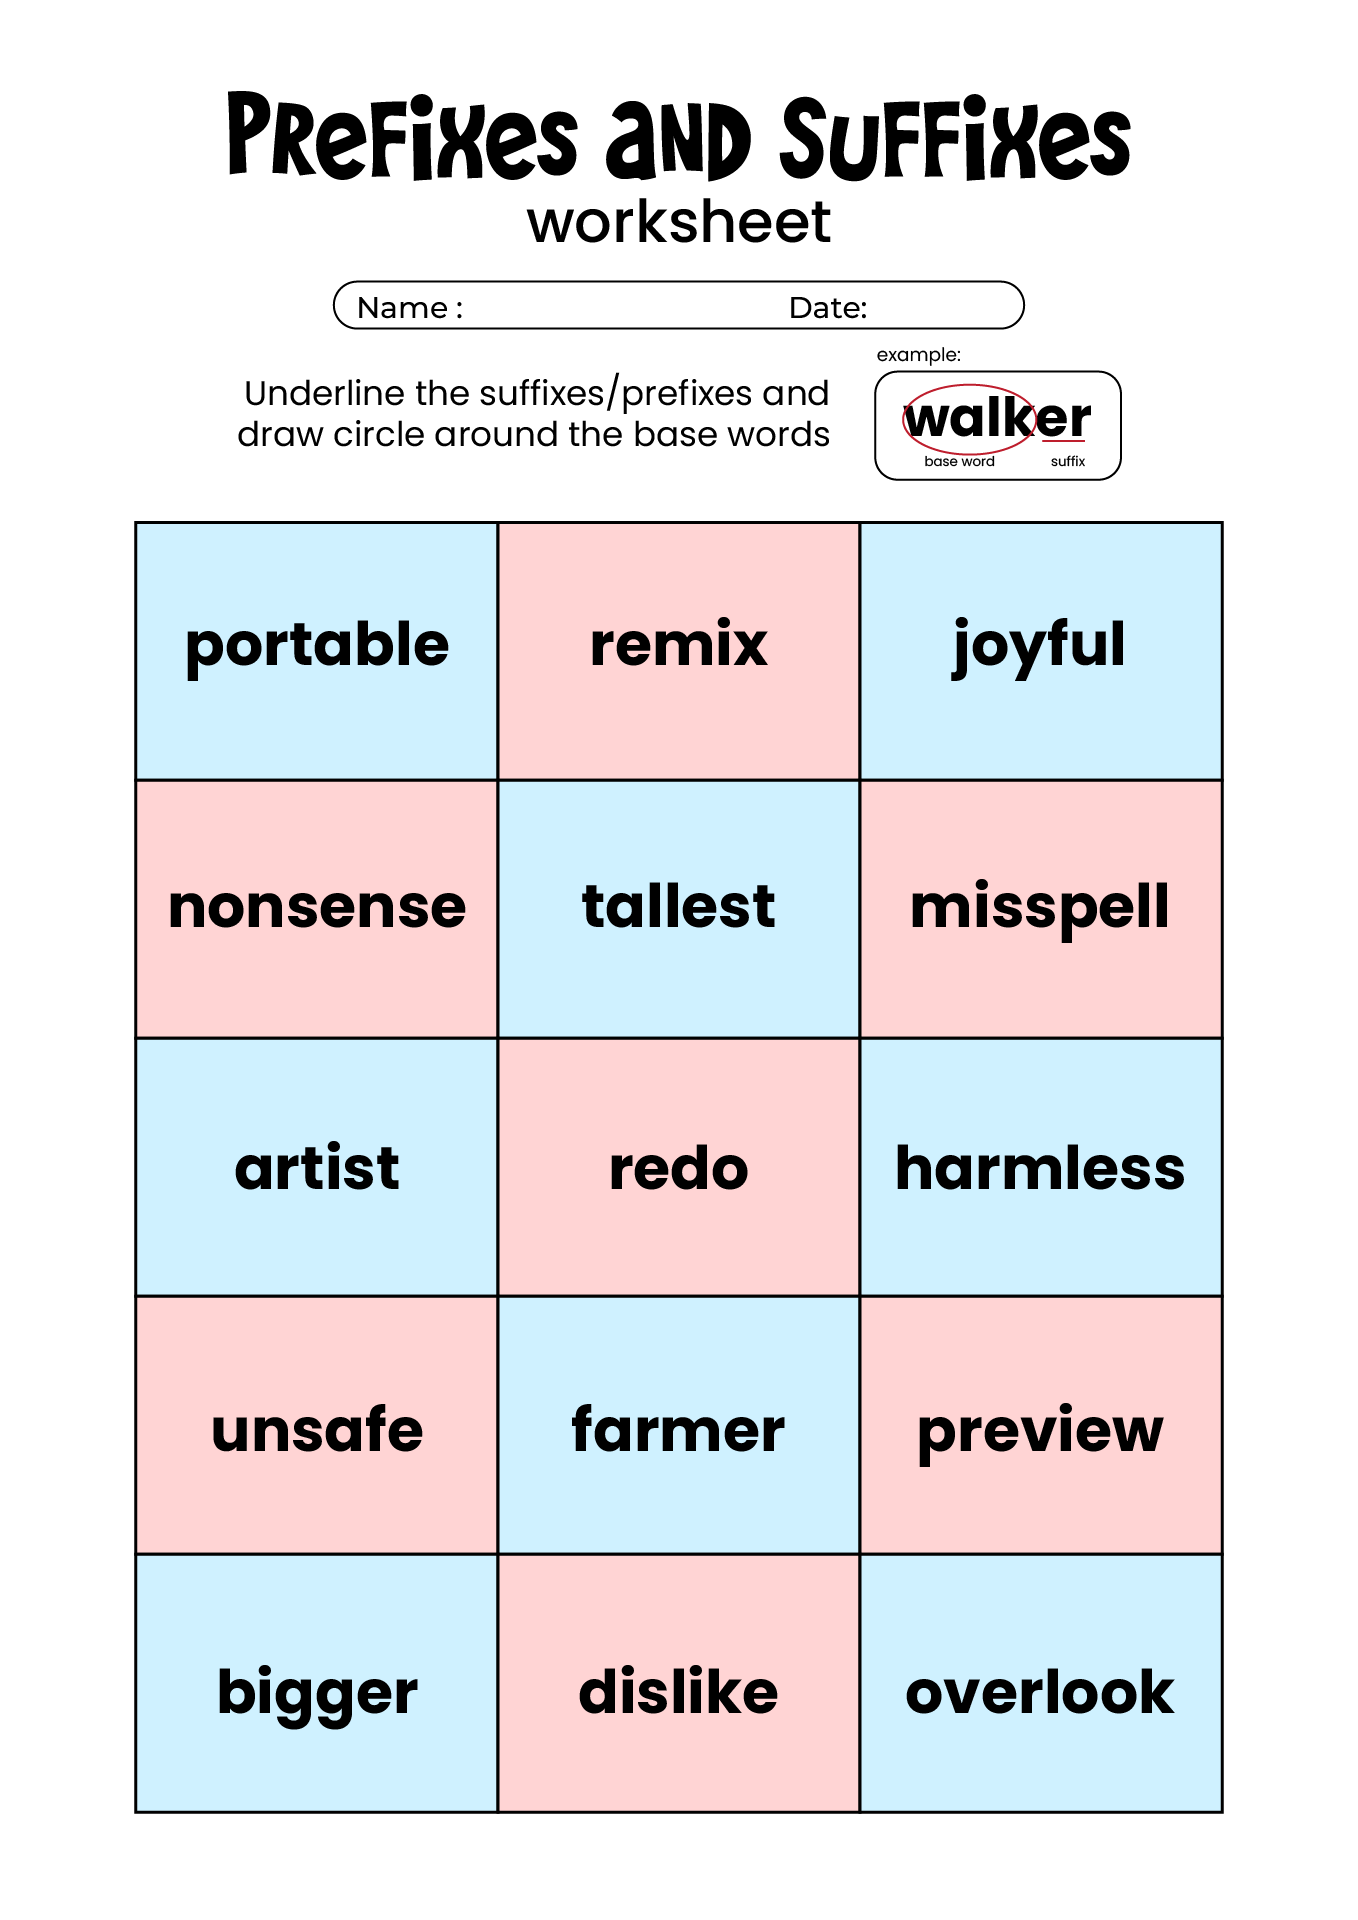 Prefix Suffix Worksheets 2nd Grade Image